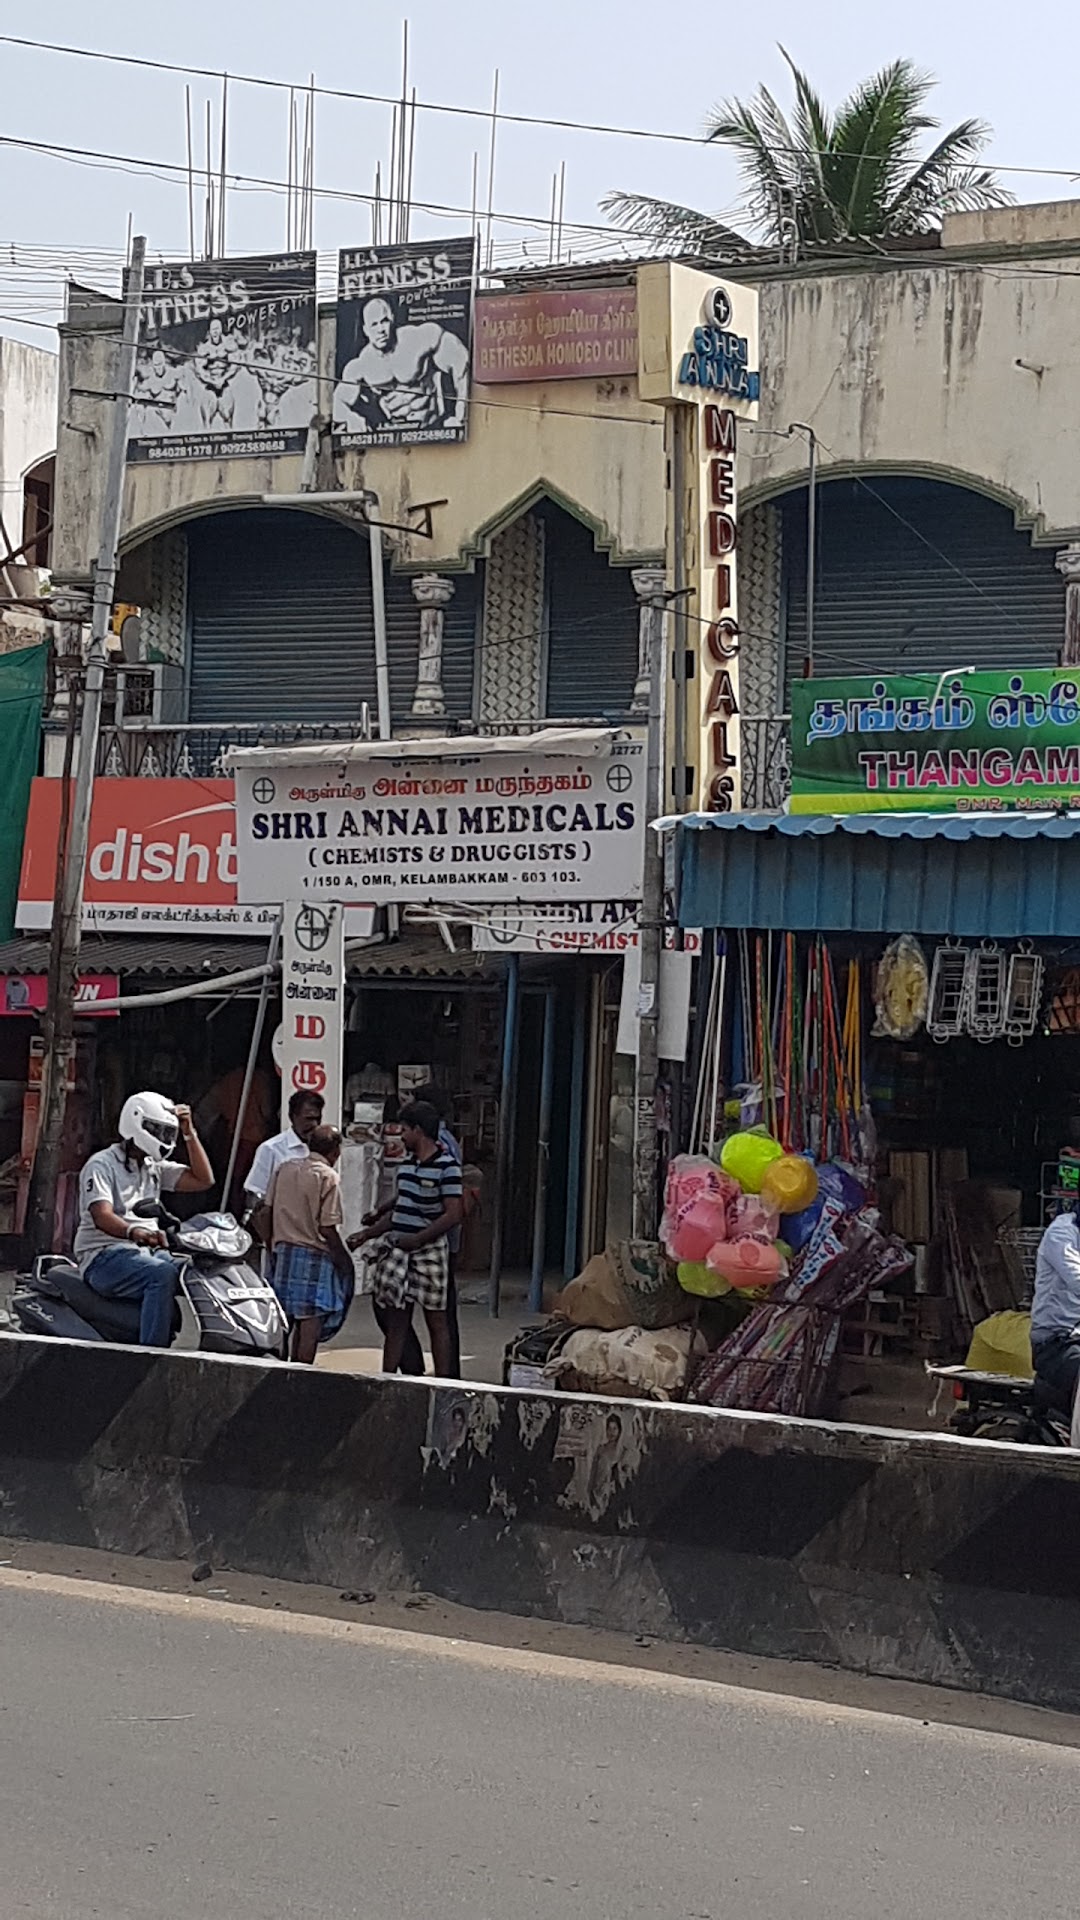 SHRI ANNAI MEDICALS